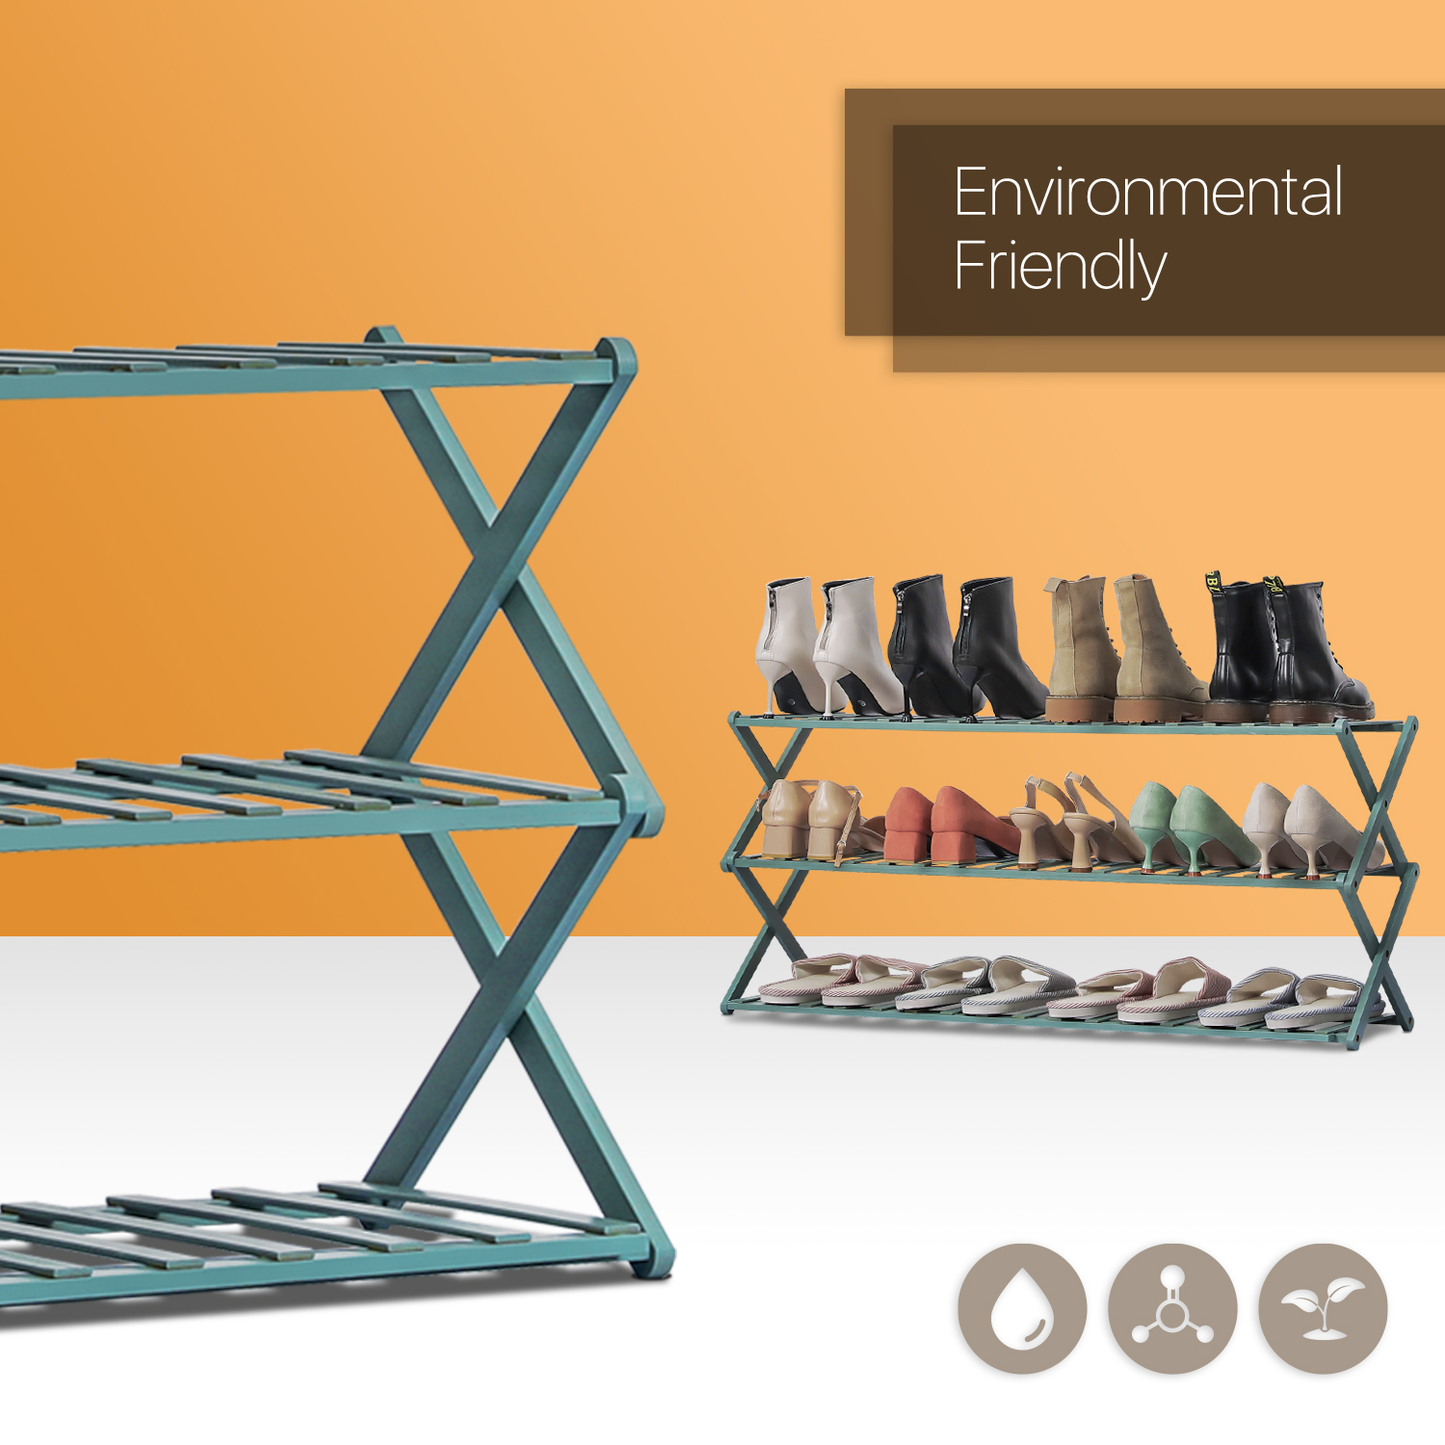 Foldable Multifunctional Shoe Rack Organizer - 3 Tier - Green